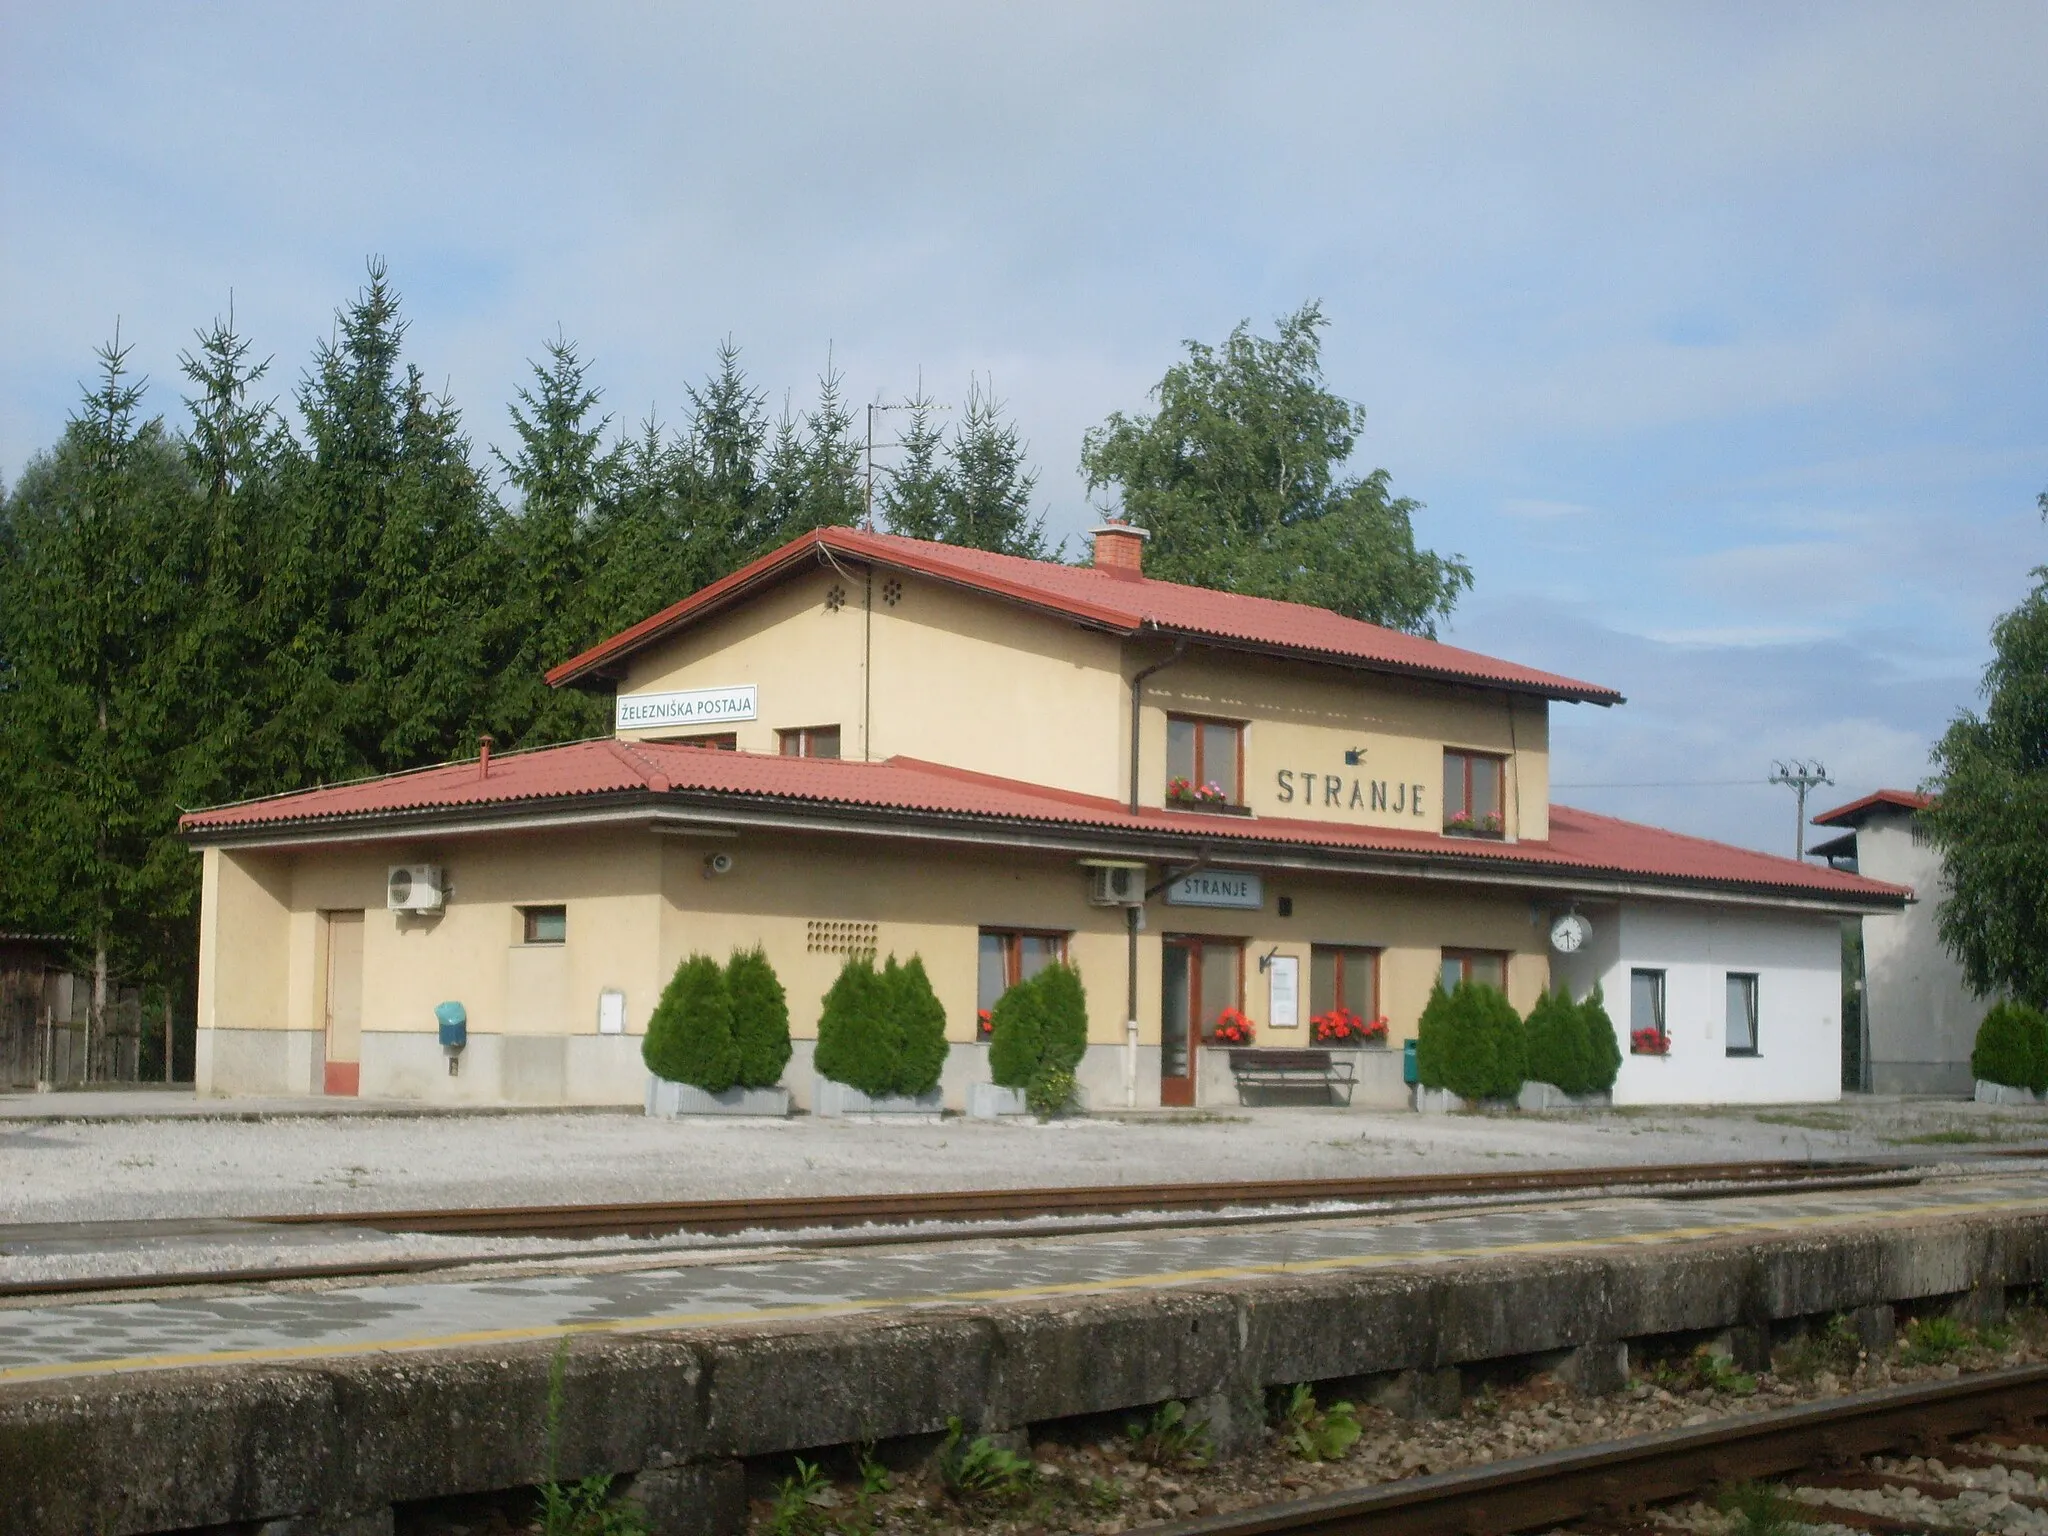 Photo showing: Train station in Stranje